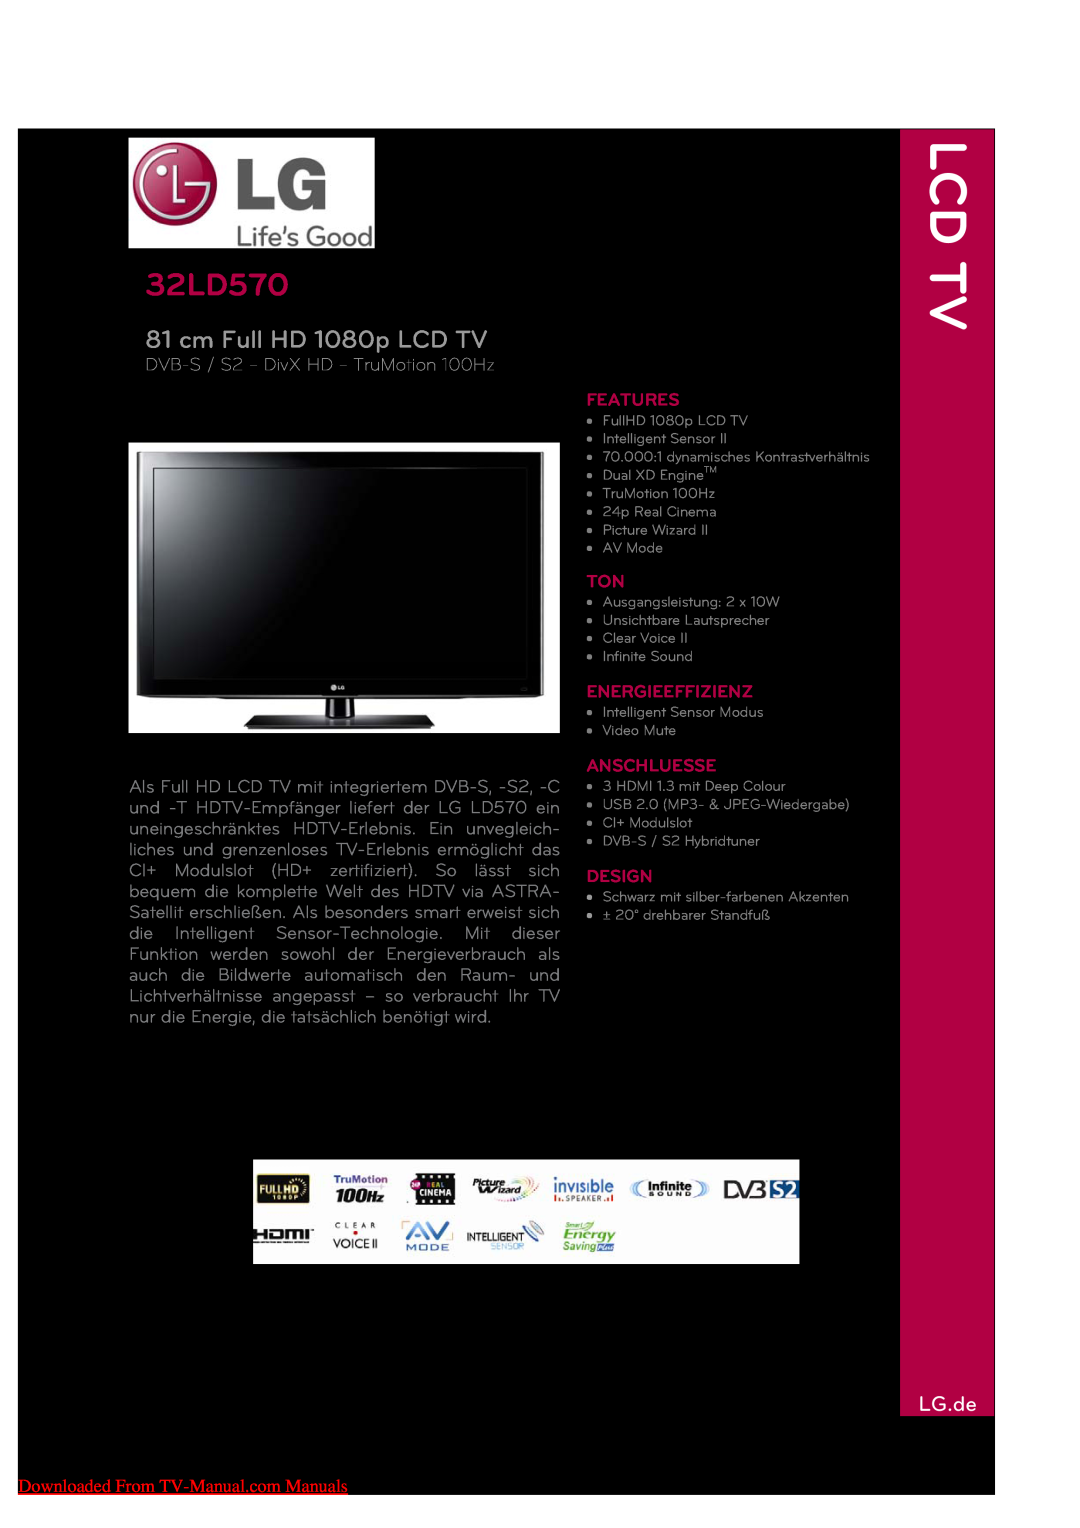 LG Electronics 32LD570 manual cm Full HD 1080p LCD TV, LG.de, DVB-S / S2 - DivX HD - TruMotion 100Hz, Lcd Tv, Features 